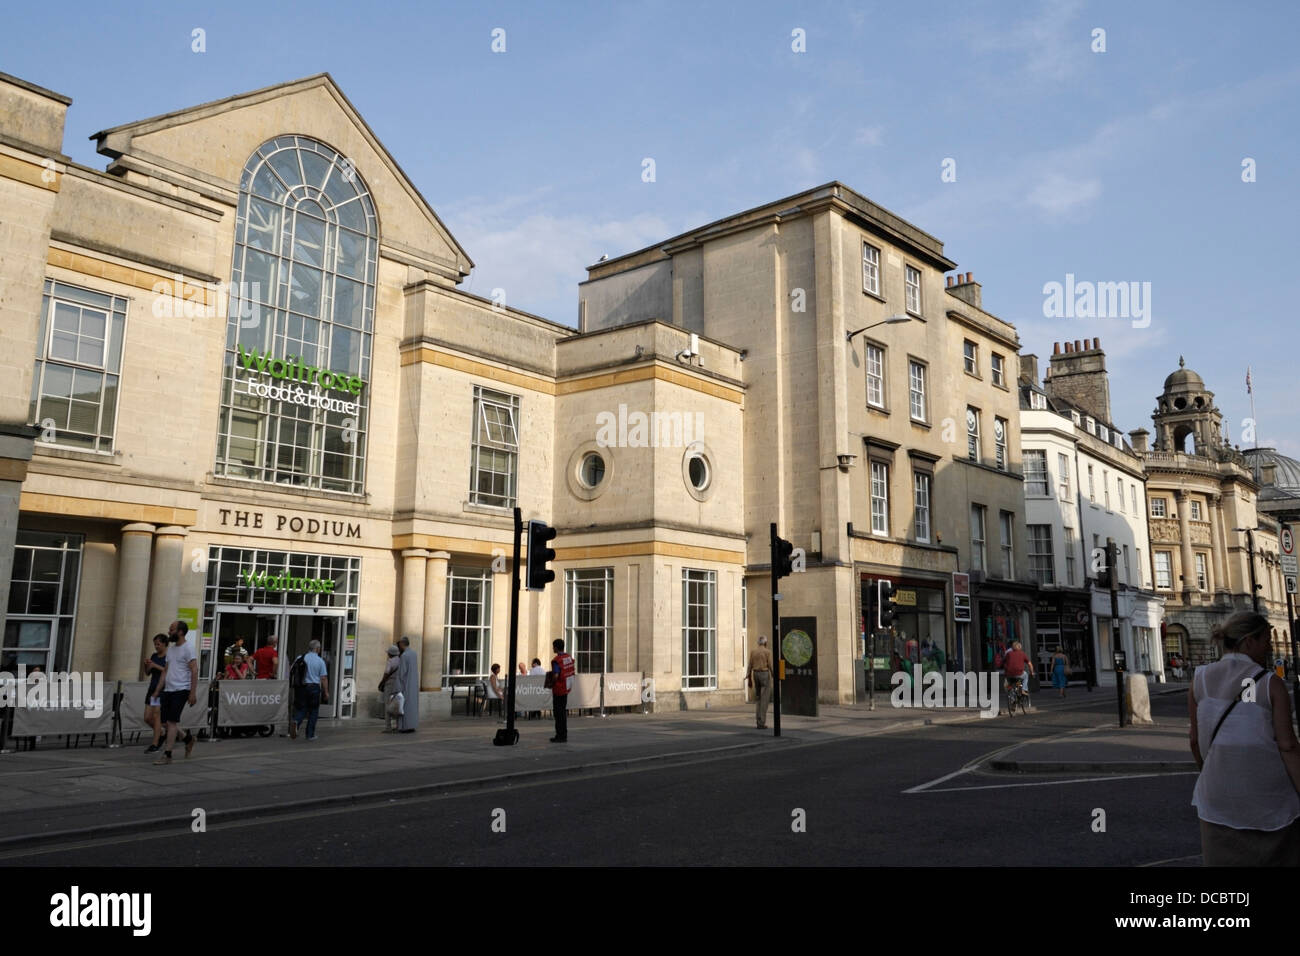 The Podium Building a Waitrose Supermarket in Bath city centre England UK. Modern Georgian inspired architecture Stock Photo